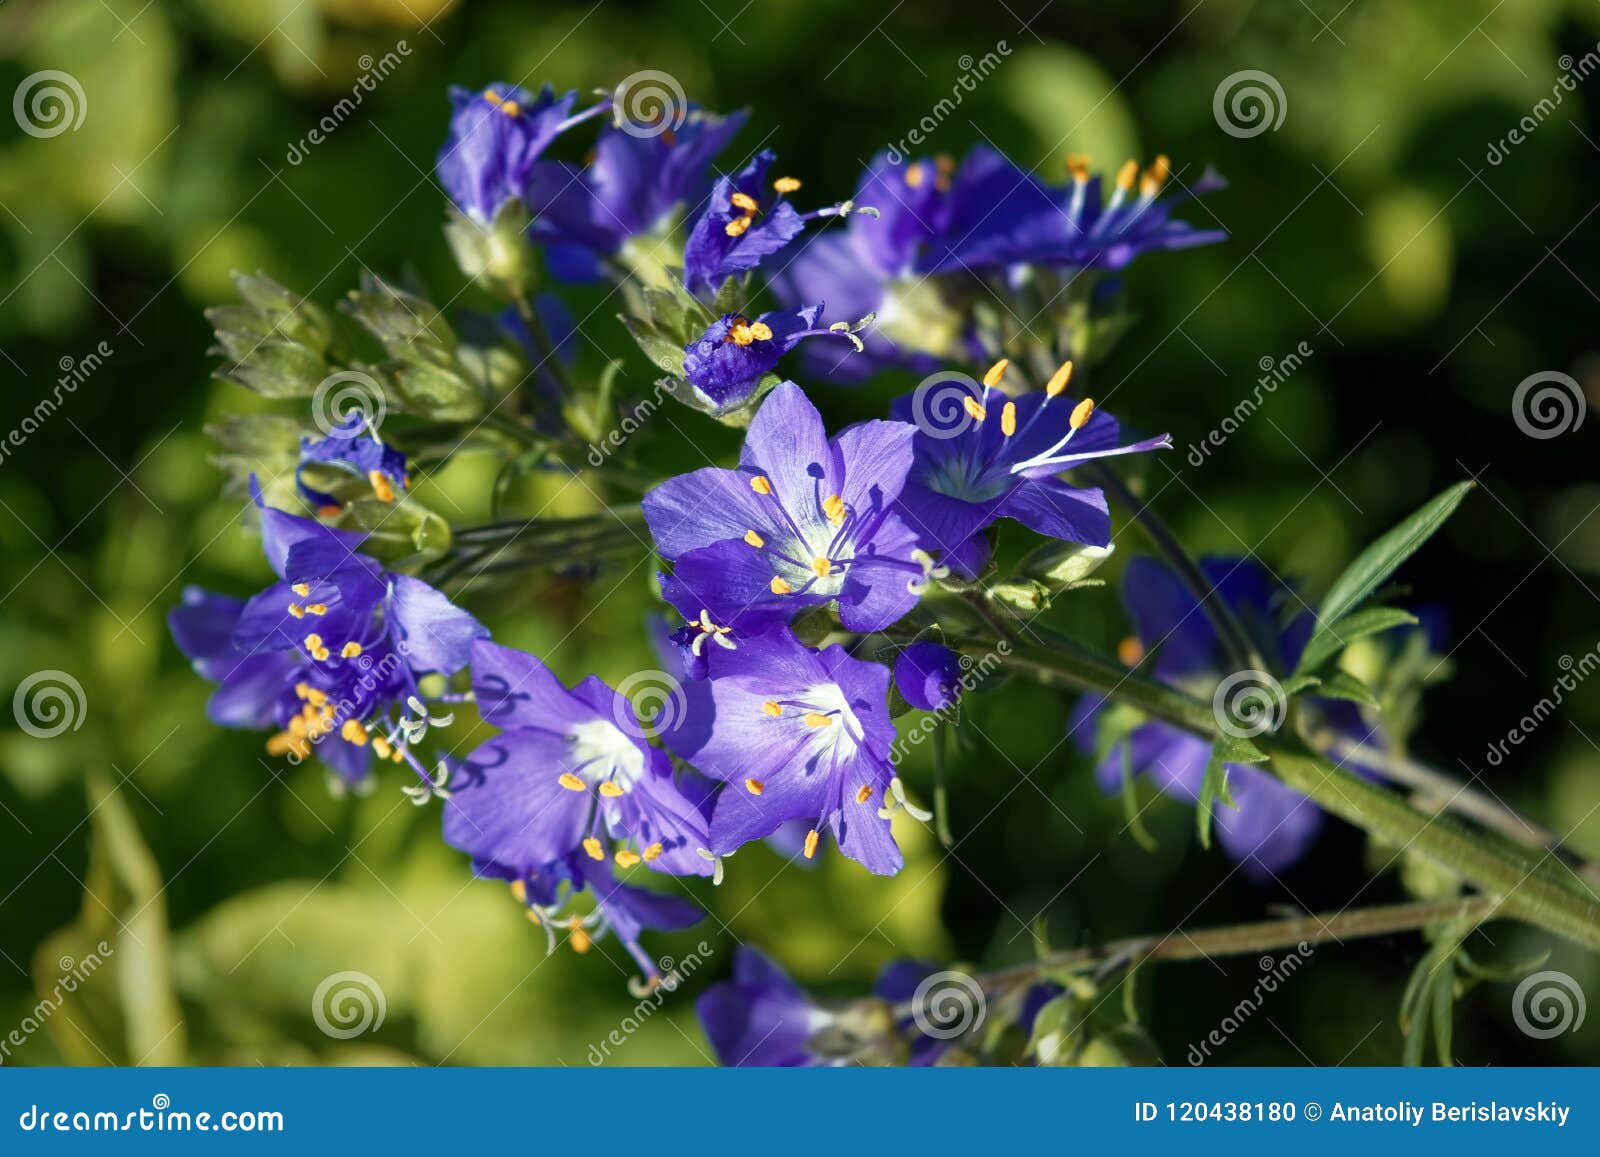 blue flowers polemonium caeruleum or jacob's-ladder